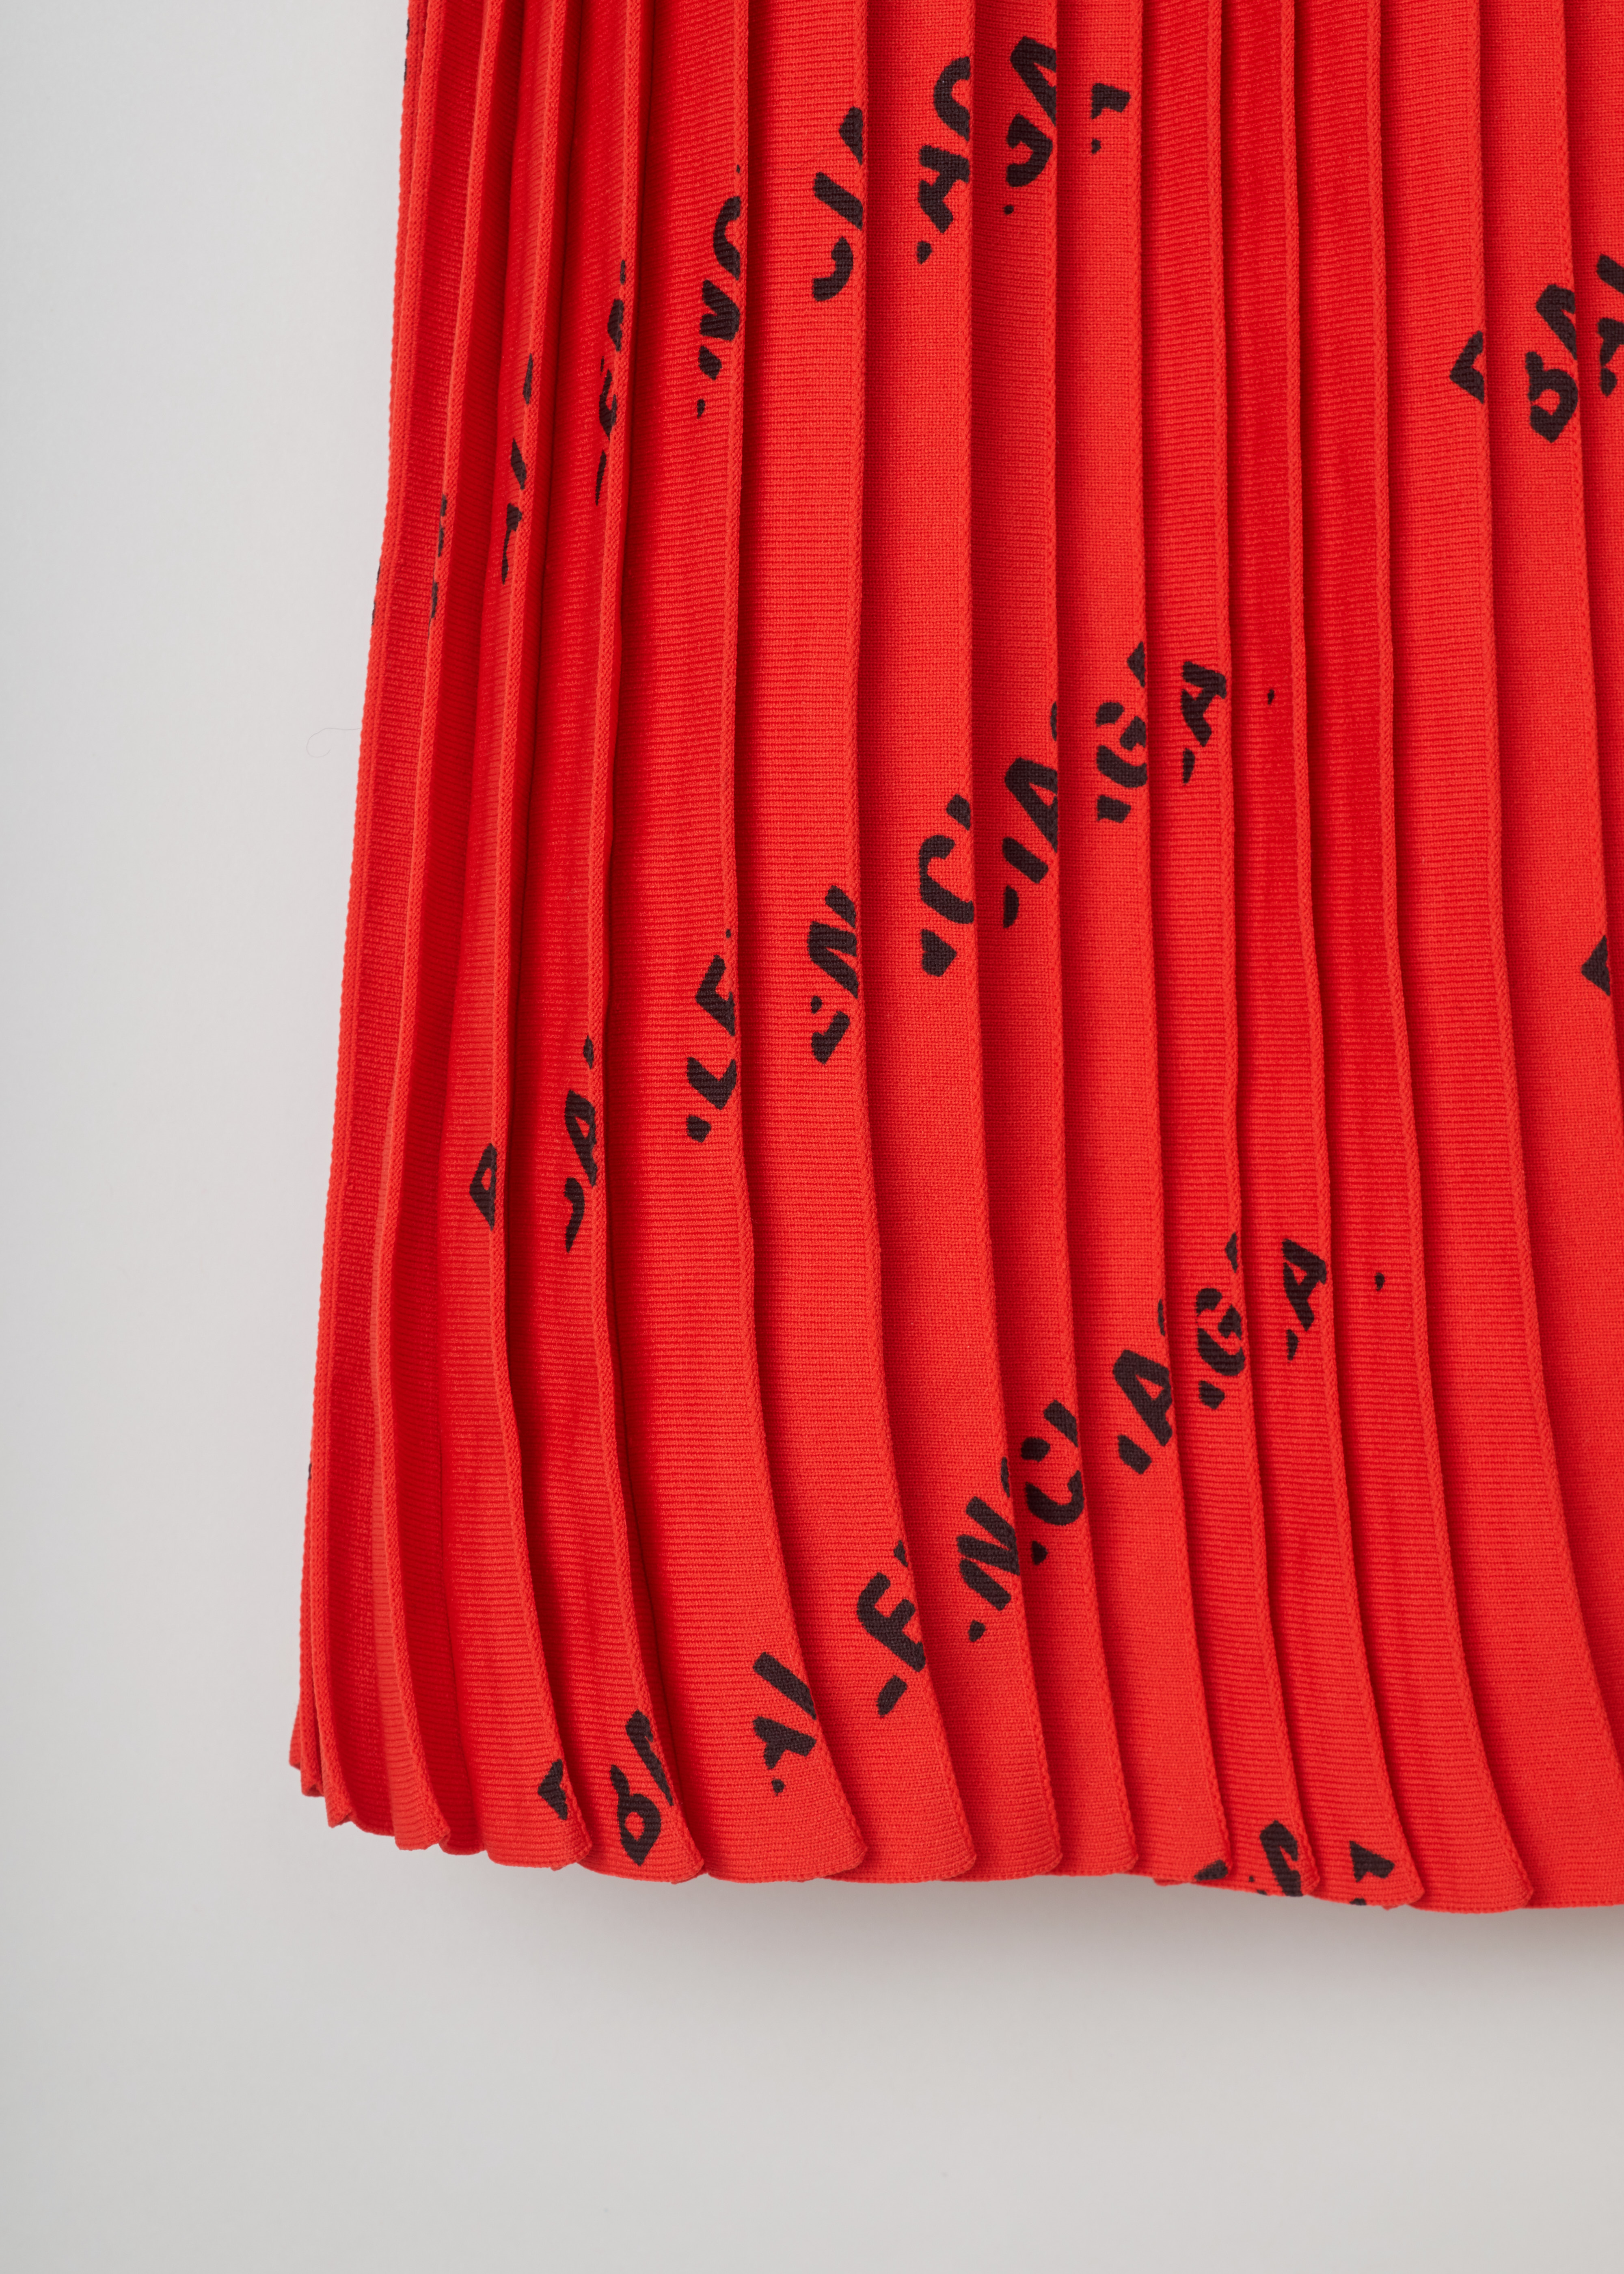 Balenciaga PlissÃ© skirt with logo pattern 570845_T6140_6282 red detail. Midi length plissÃ© skirt with an all over logo print of the Balenciaga logo and an elasticated waistband.